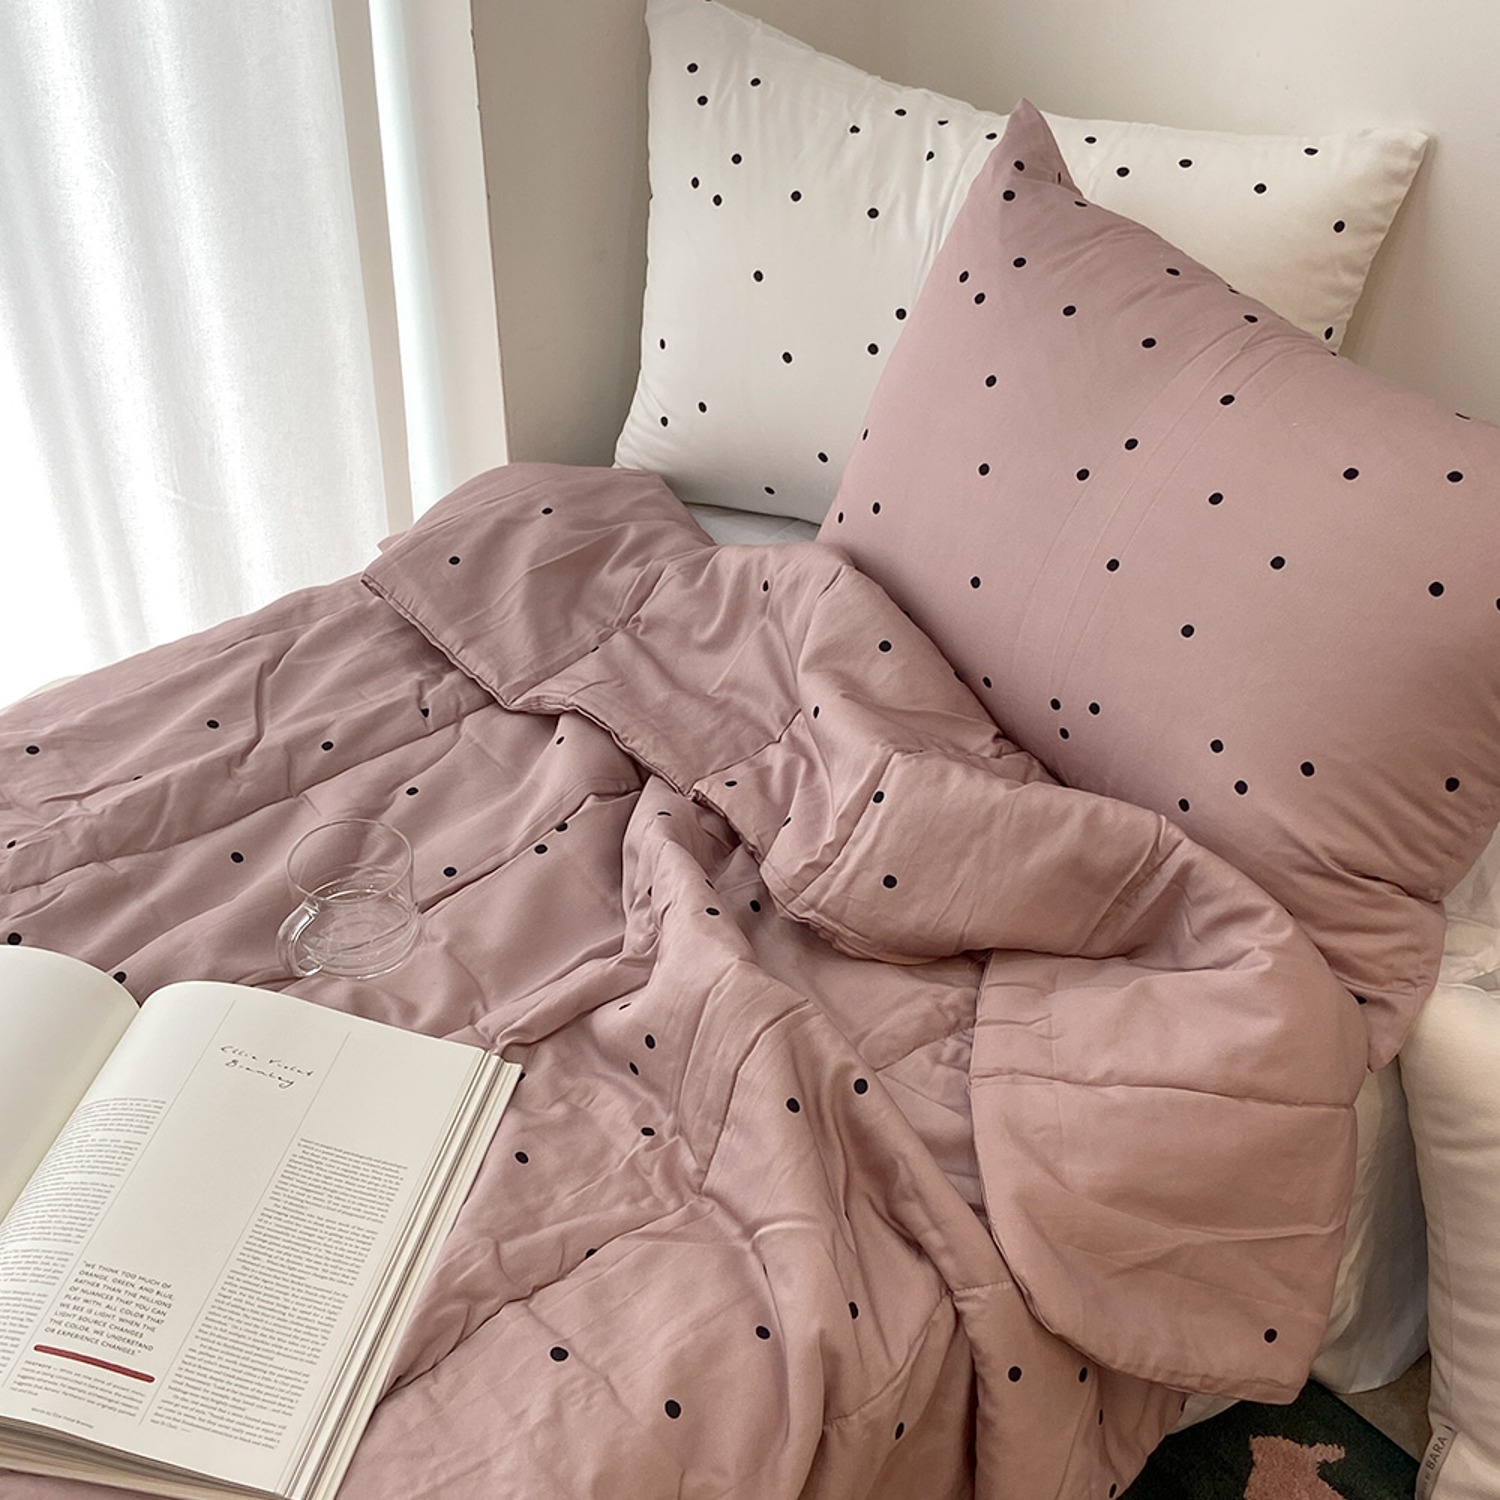 [drawing AMY] Recipe Grayishpink summer bed comforter set